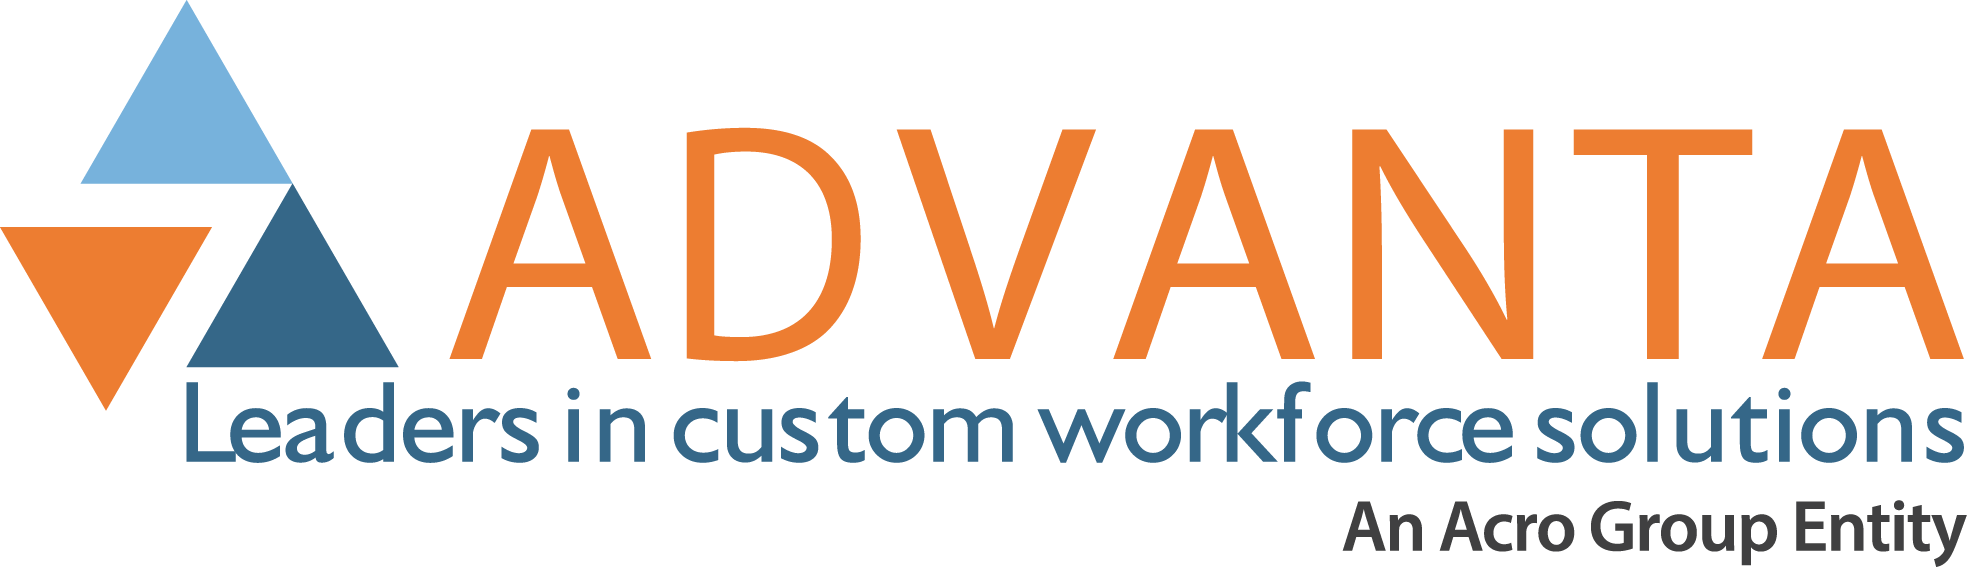 Advanta Leaders in Custom workforce solutions. An Acro Group Entity